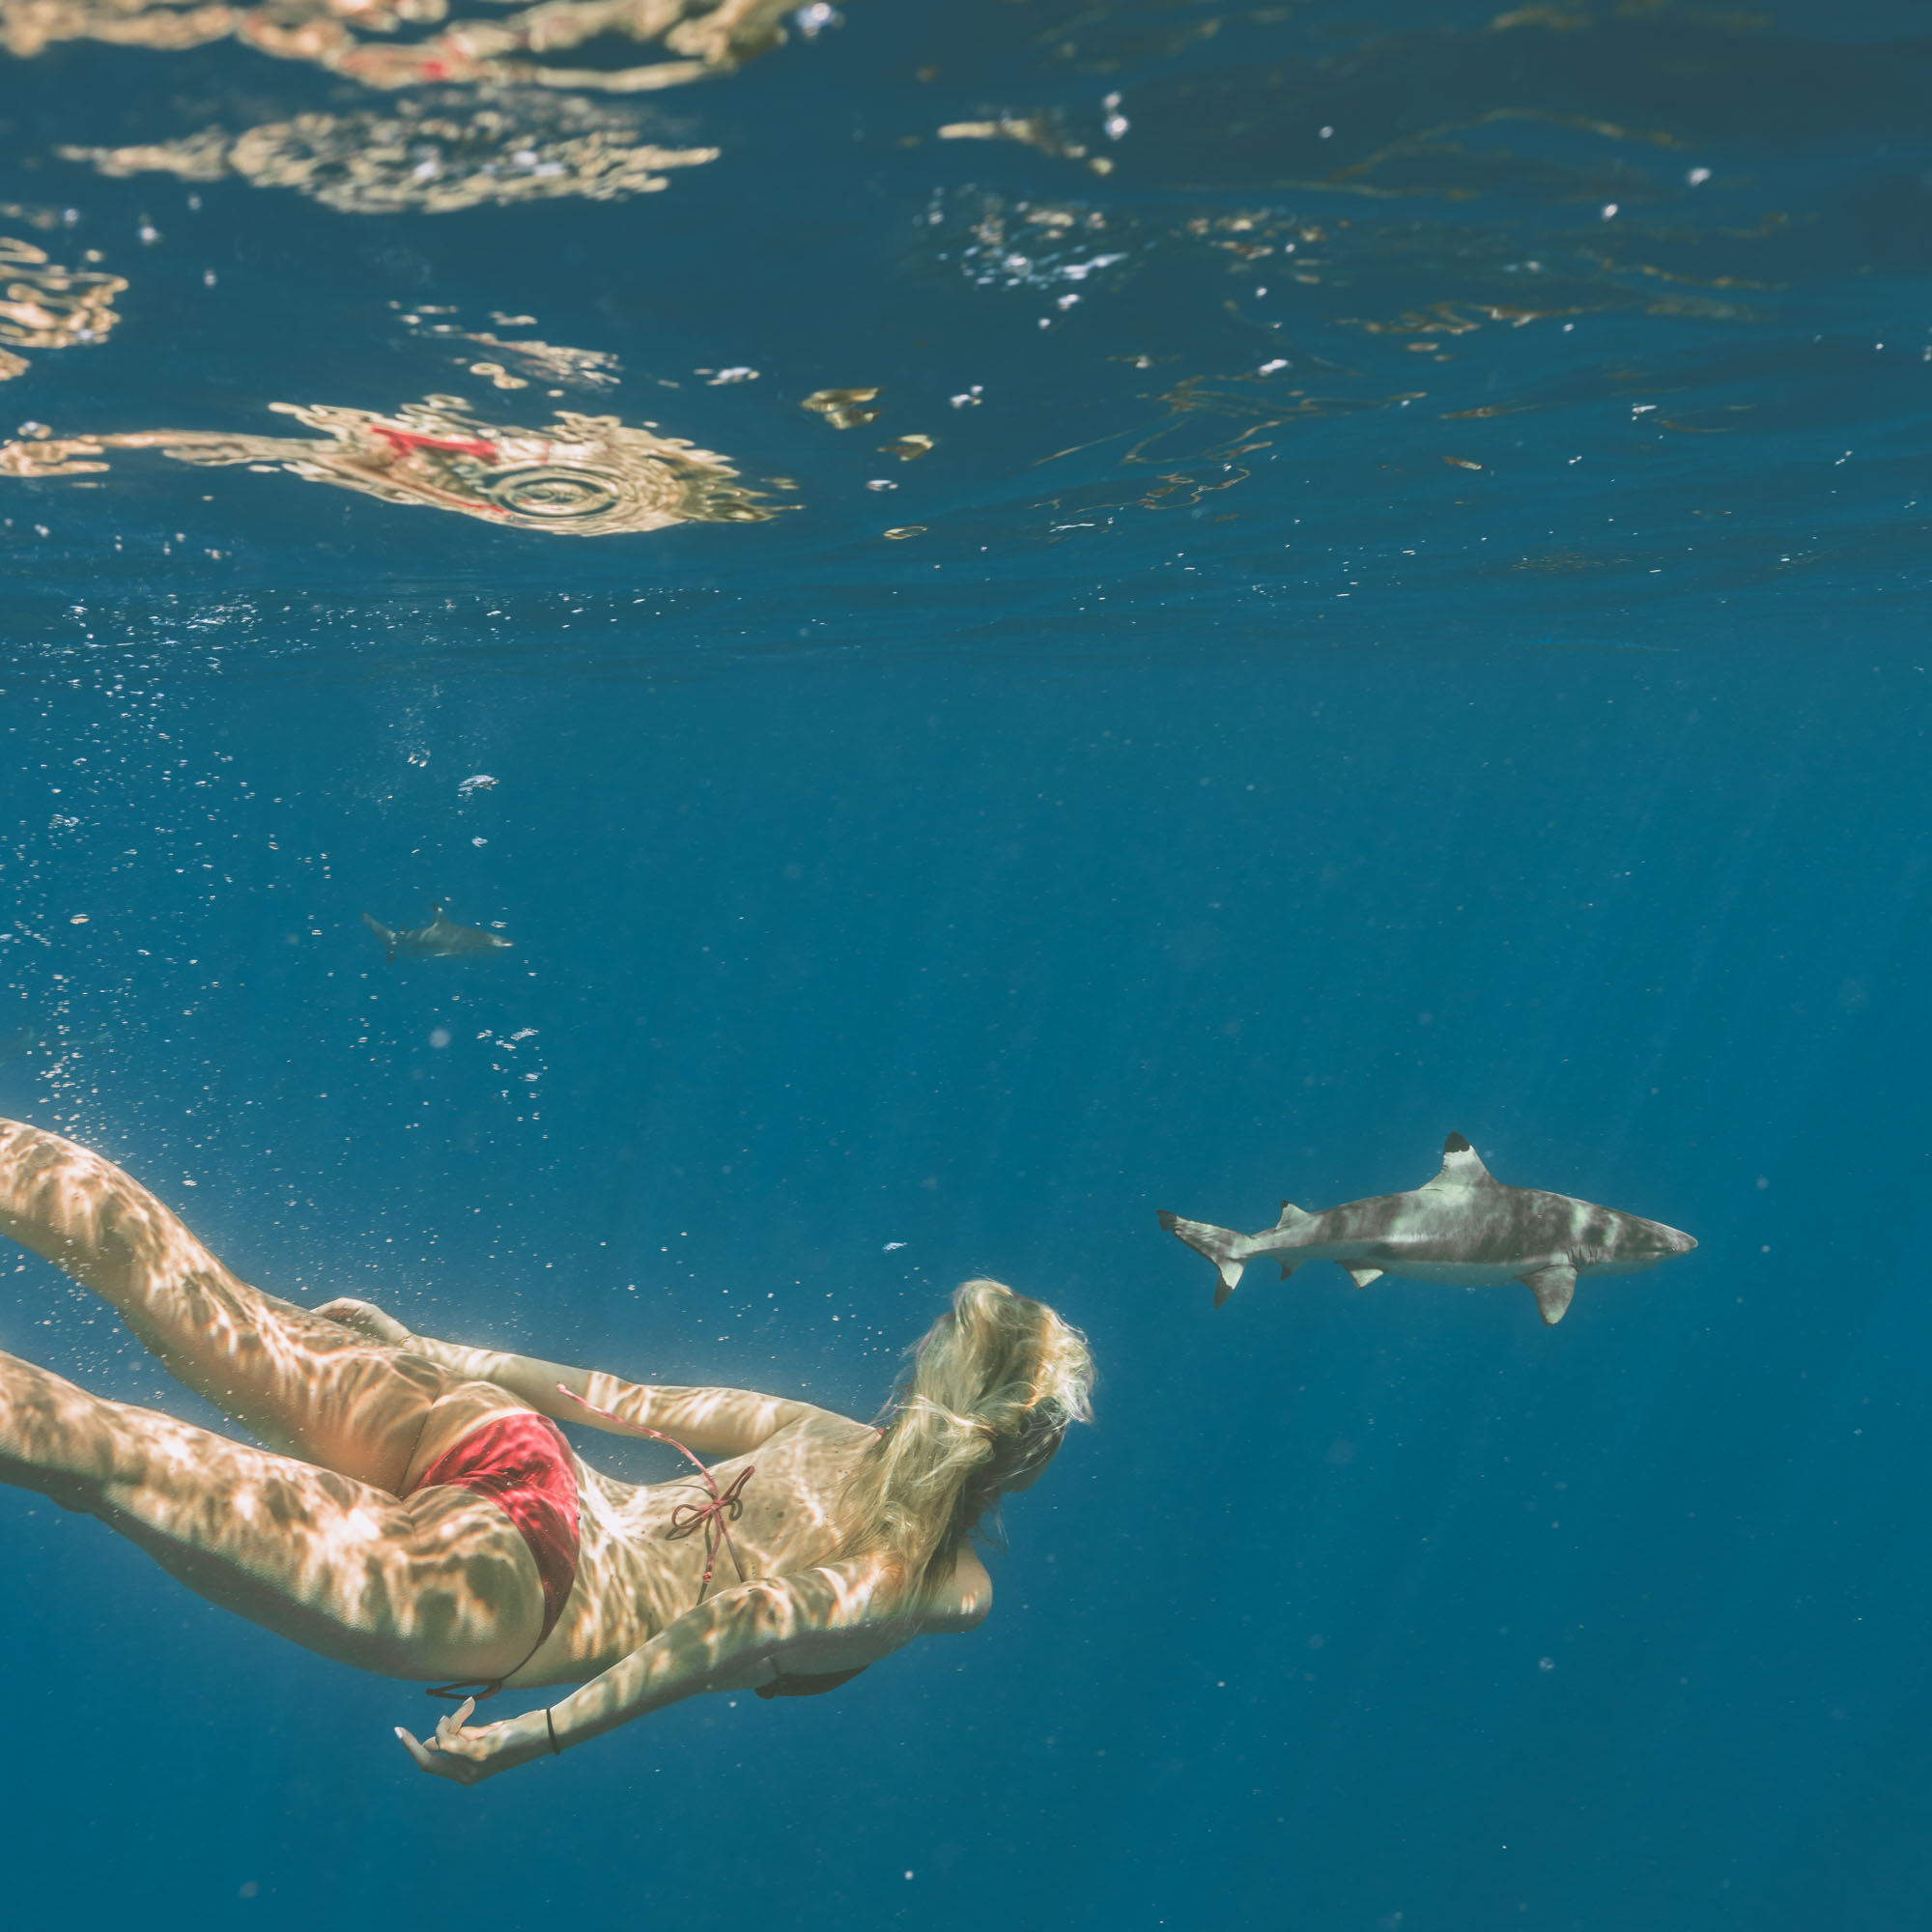 Swimming with sharks in Bora Bora Tahiti for our honeymoon via @finduslost